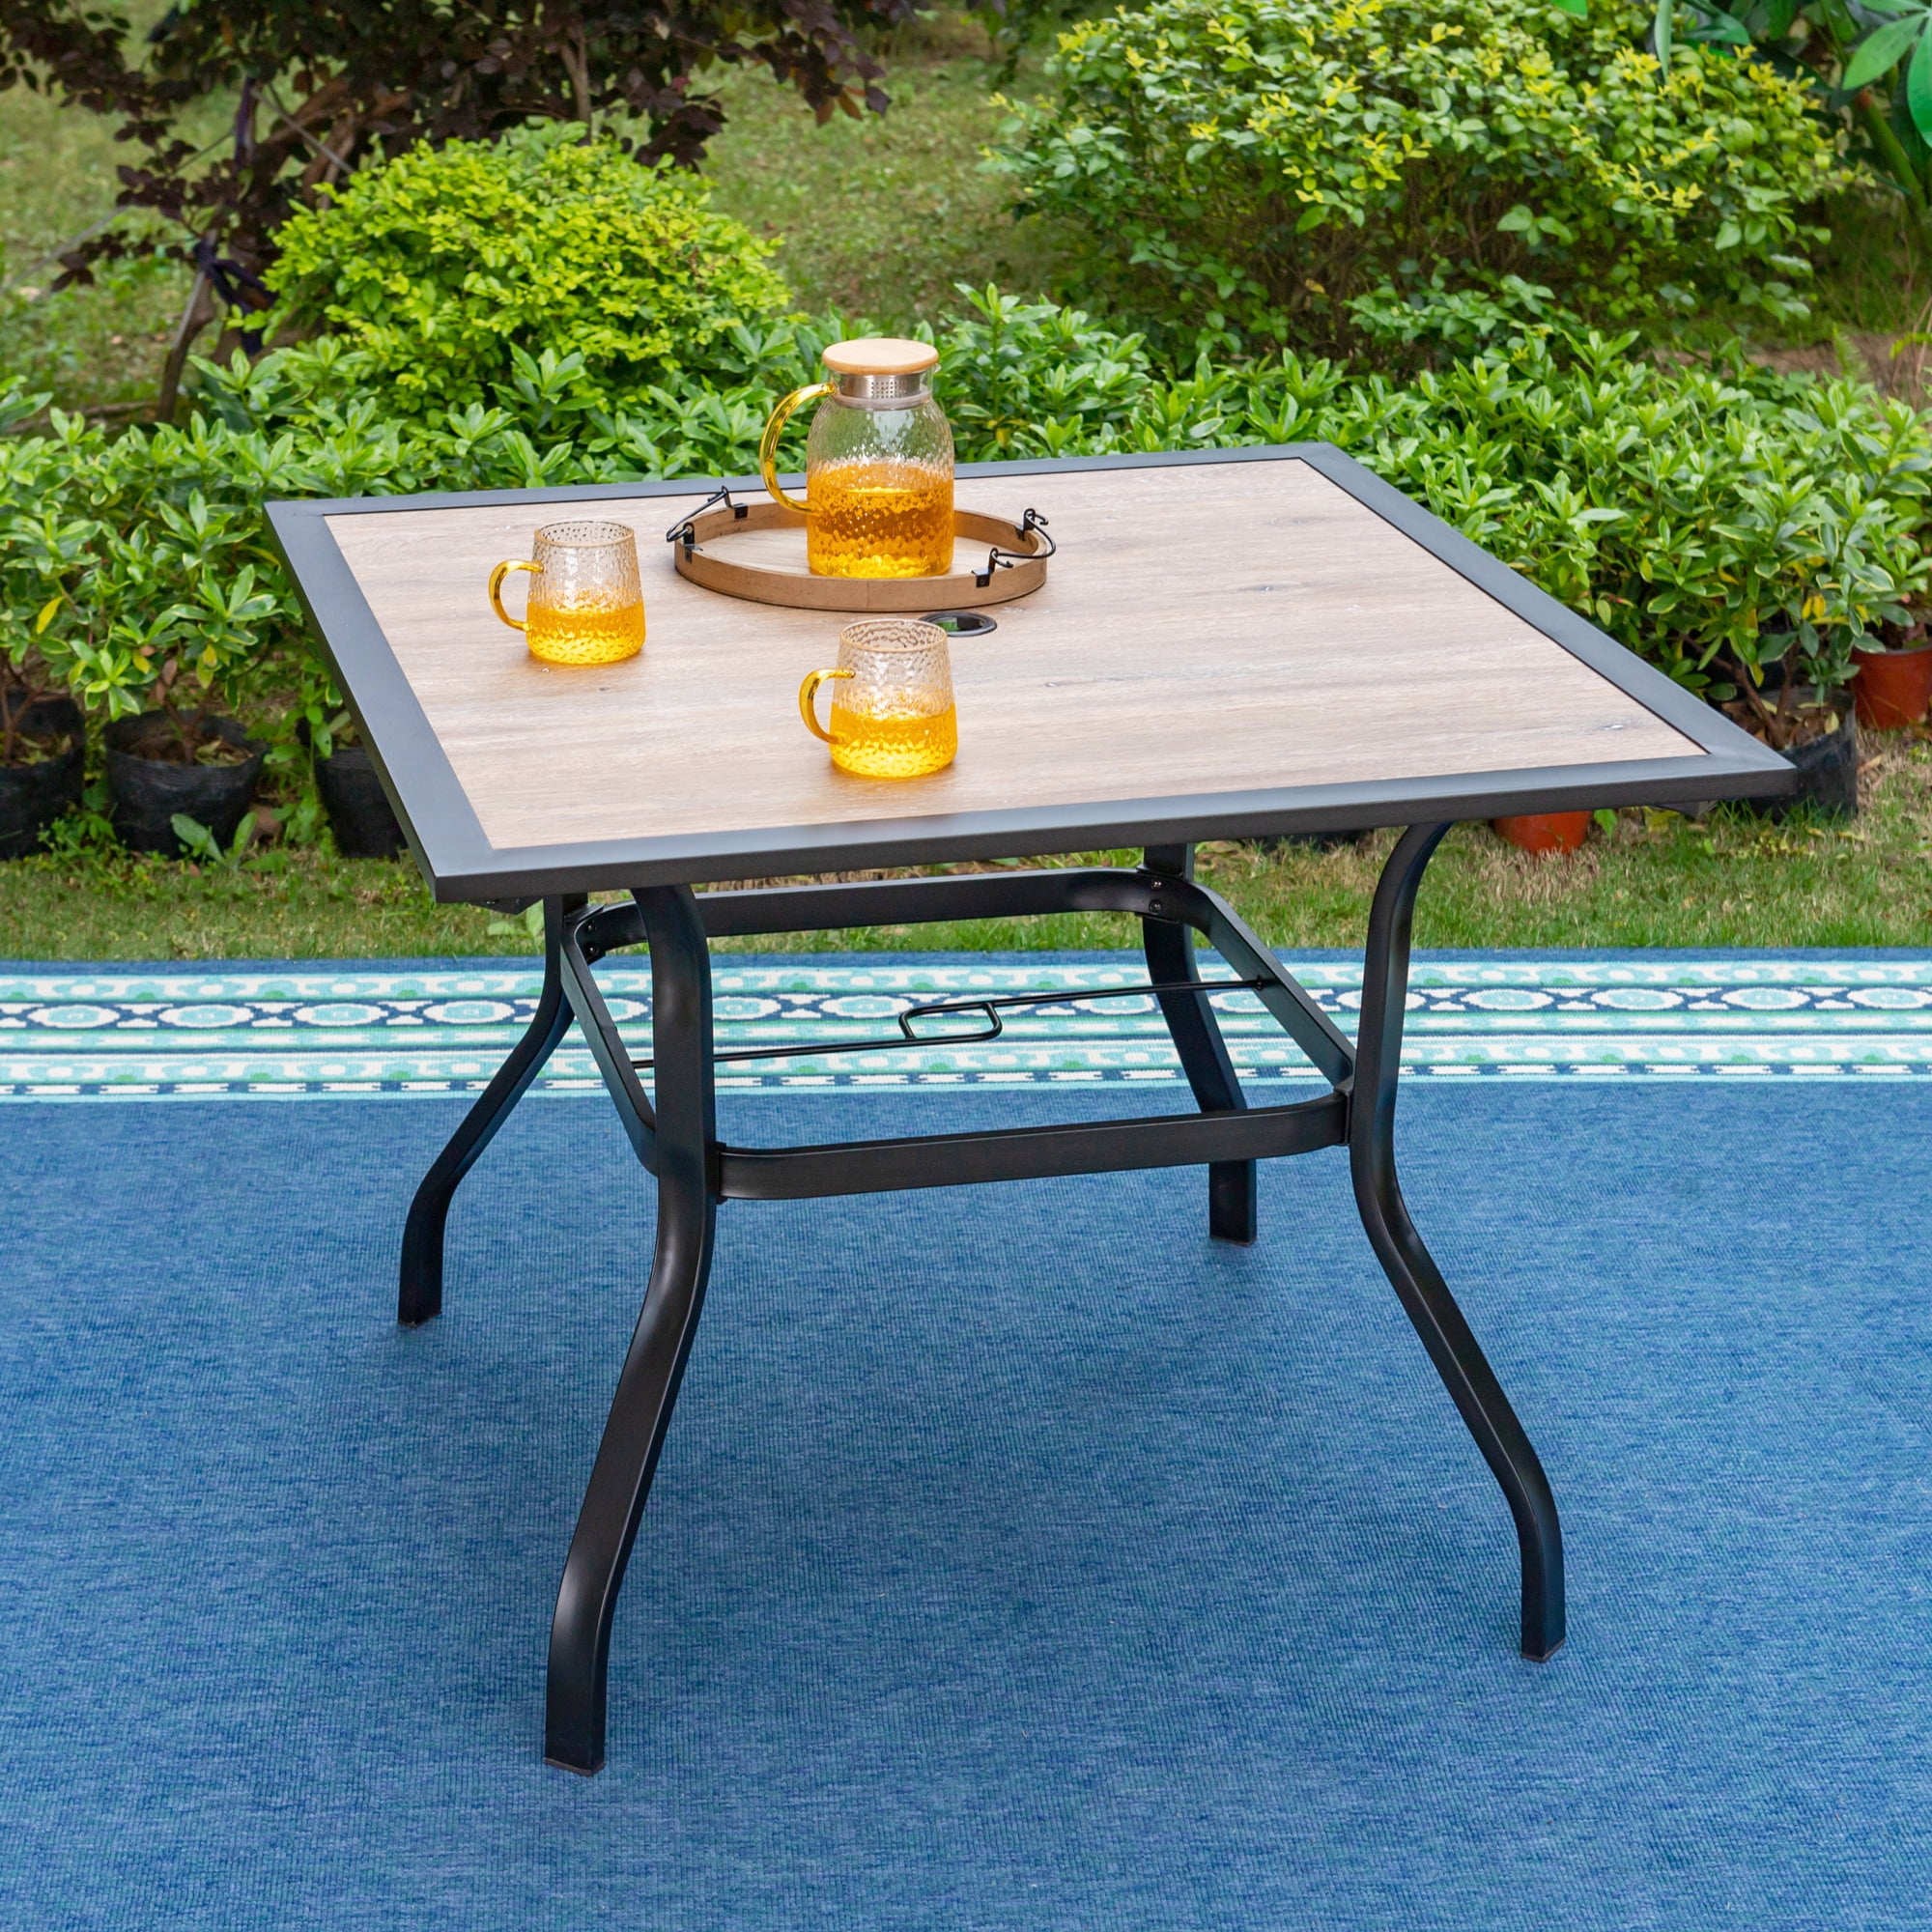 Square Metal Table & Frame Alfresco Garden Bistro Cafe Table 